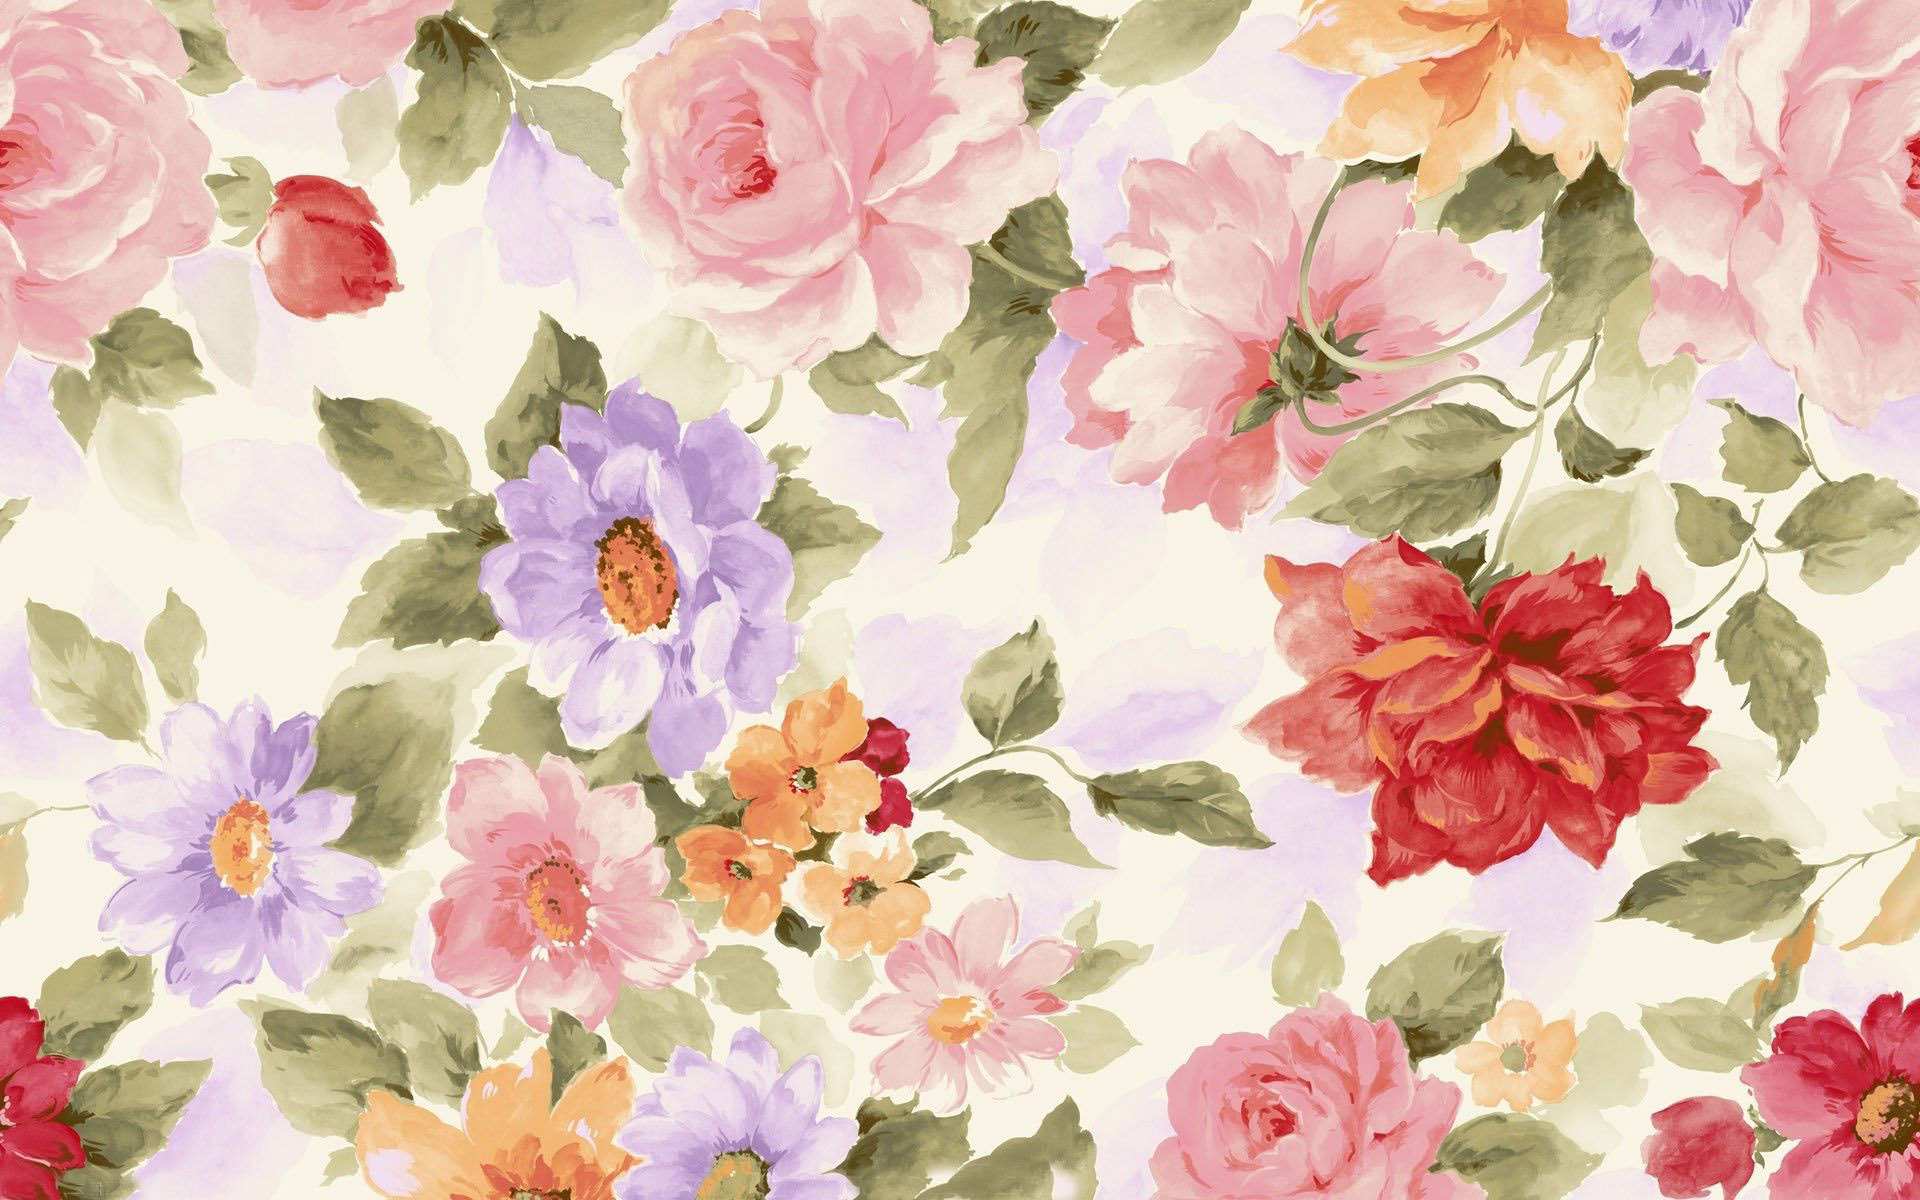 Watercolor Rose Wallpaper. Explore collection